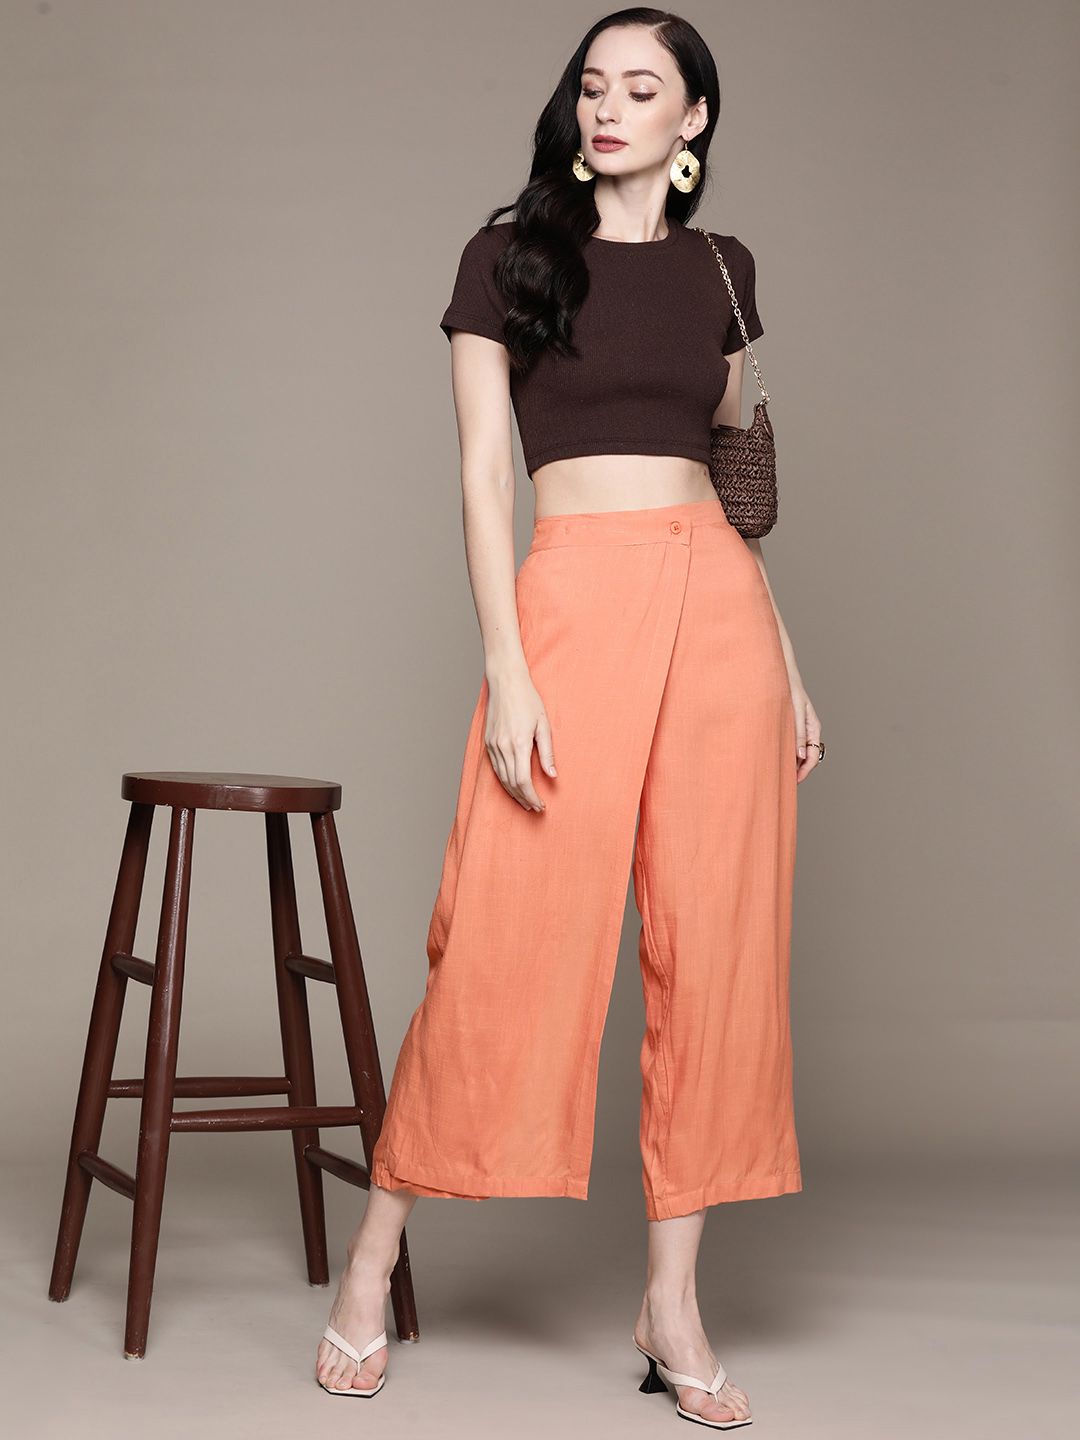 aarke Ritu Kumar Women Solid Regular Fit Culottes Trousers Price in India